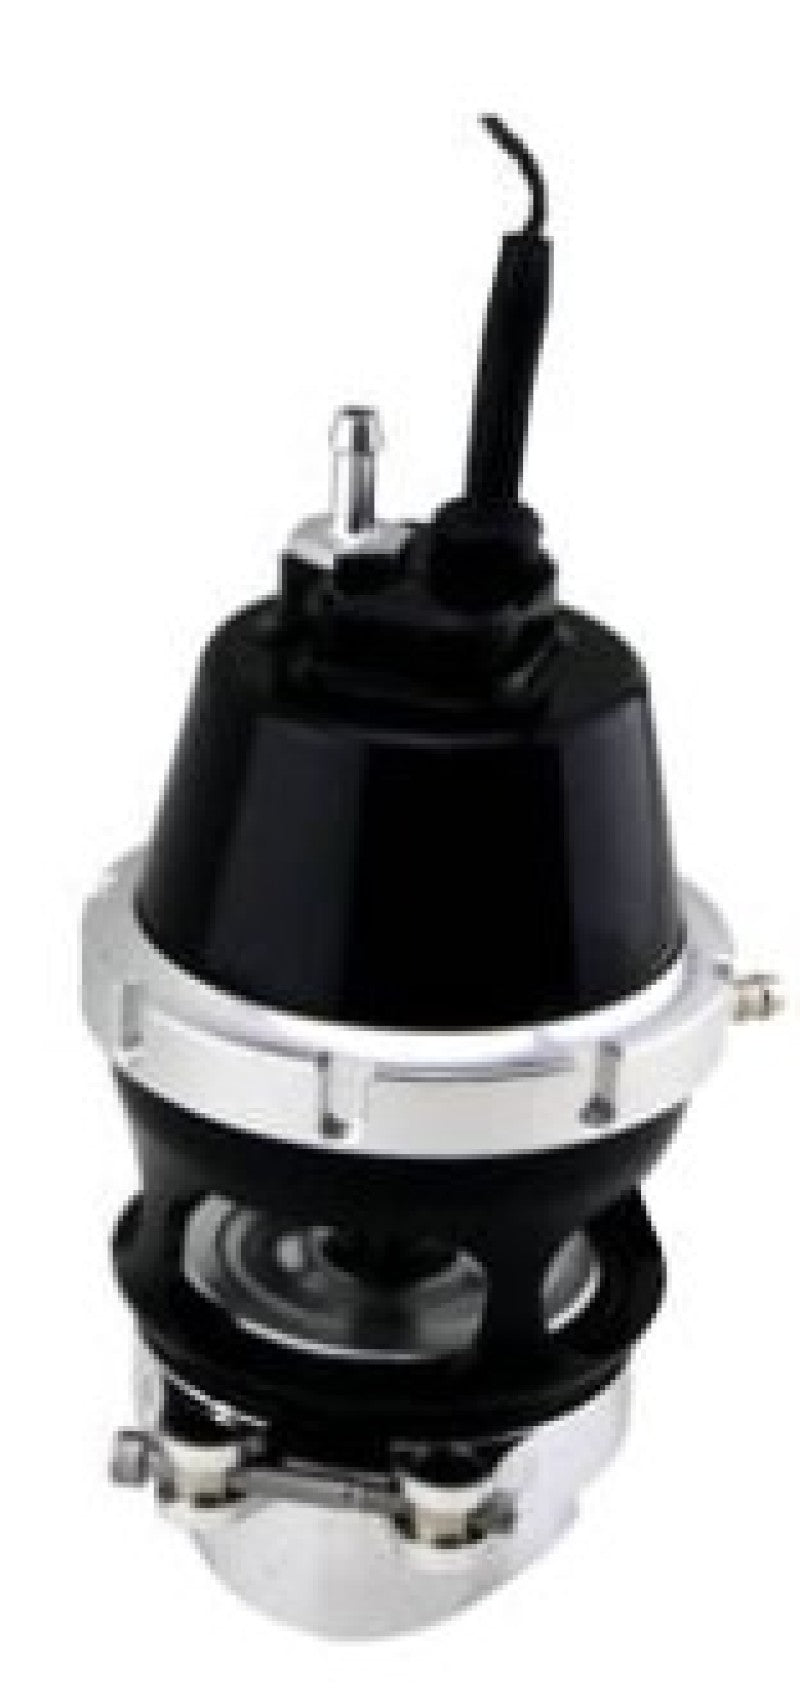 TS-0207-1102 Turbosmart BOV Power Port w/ Sensor Cap - Black